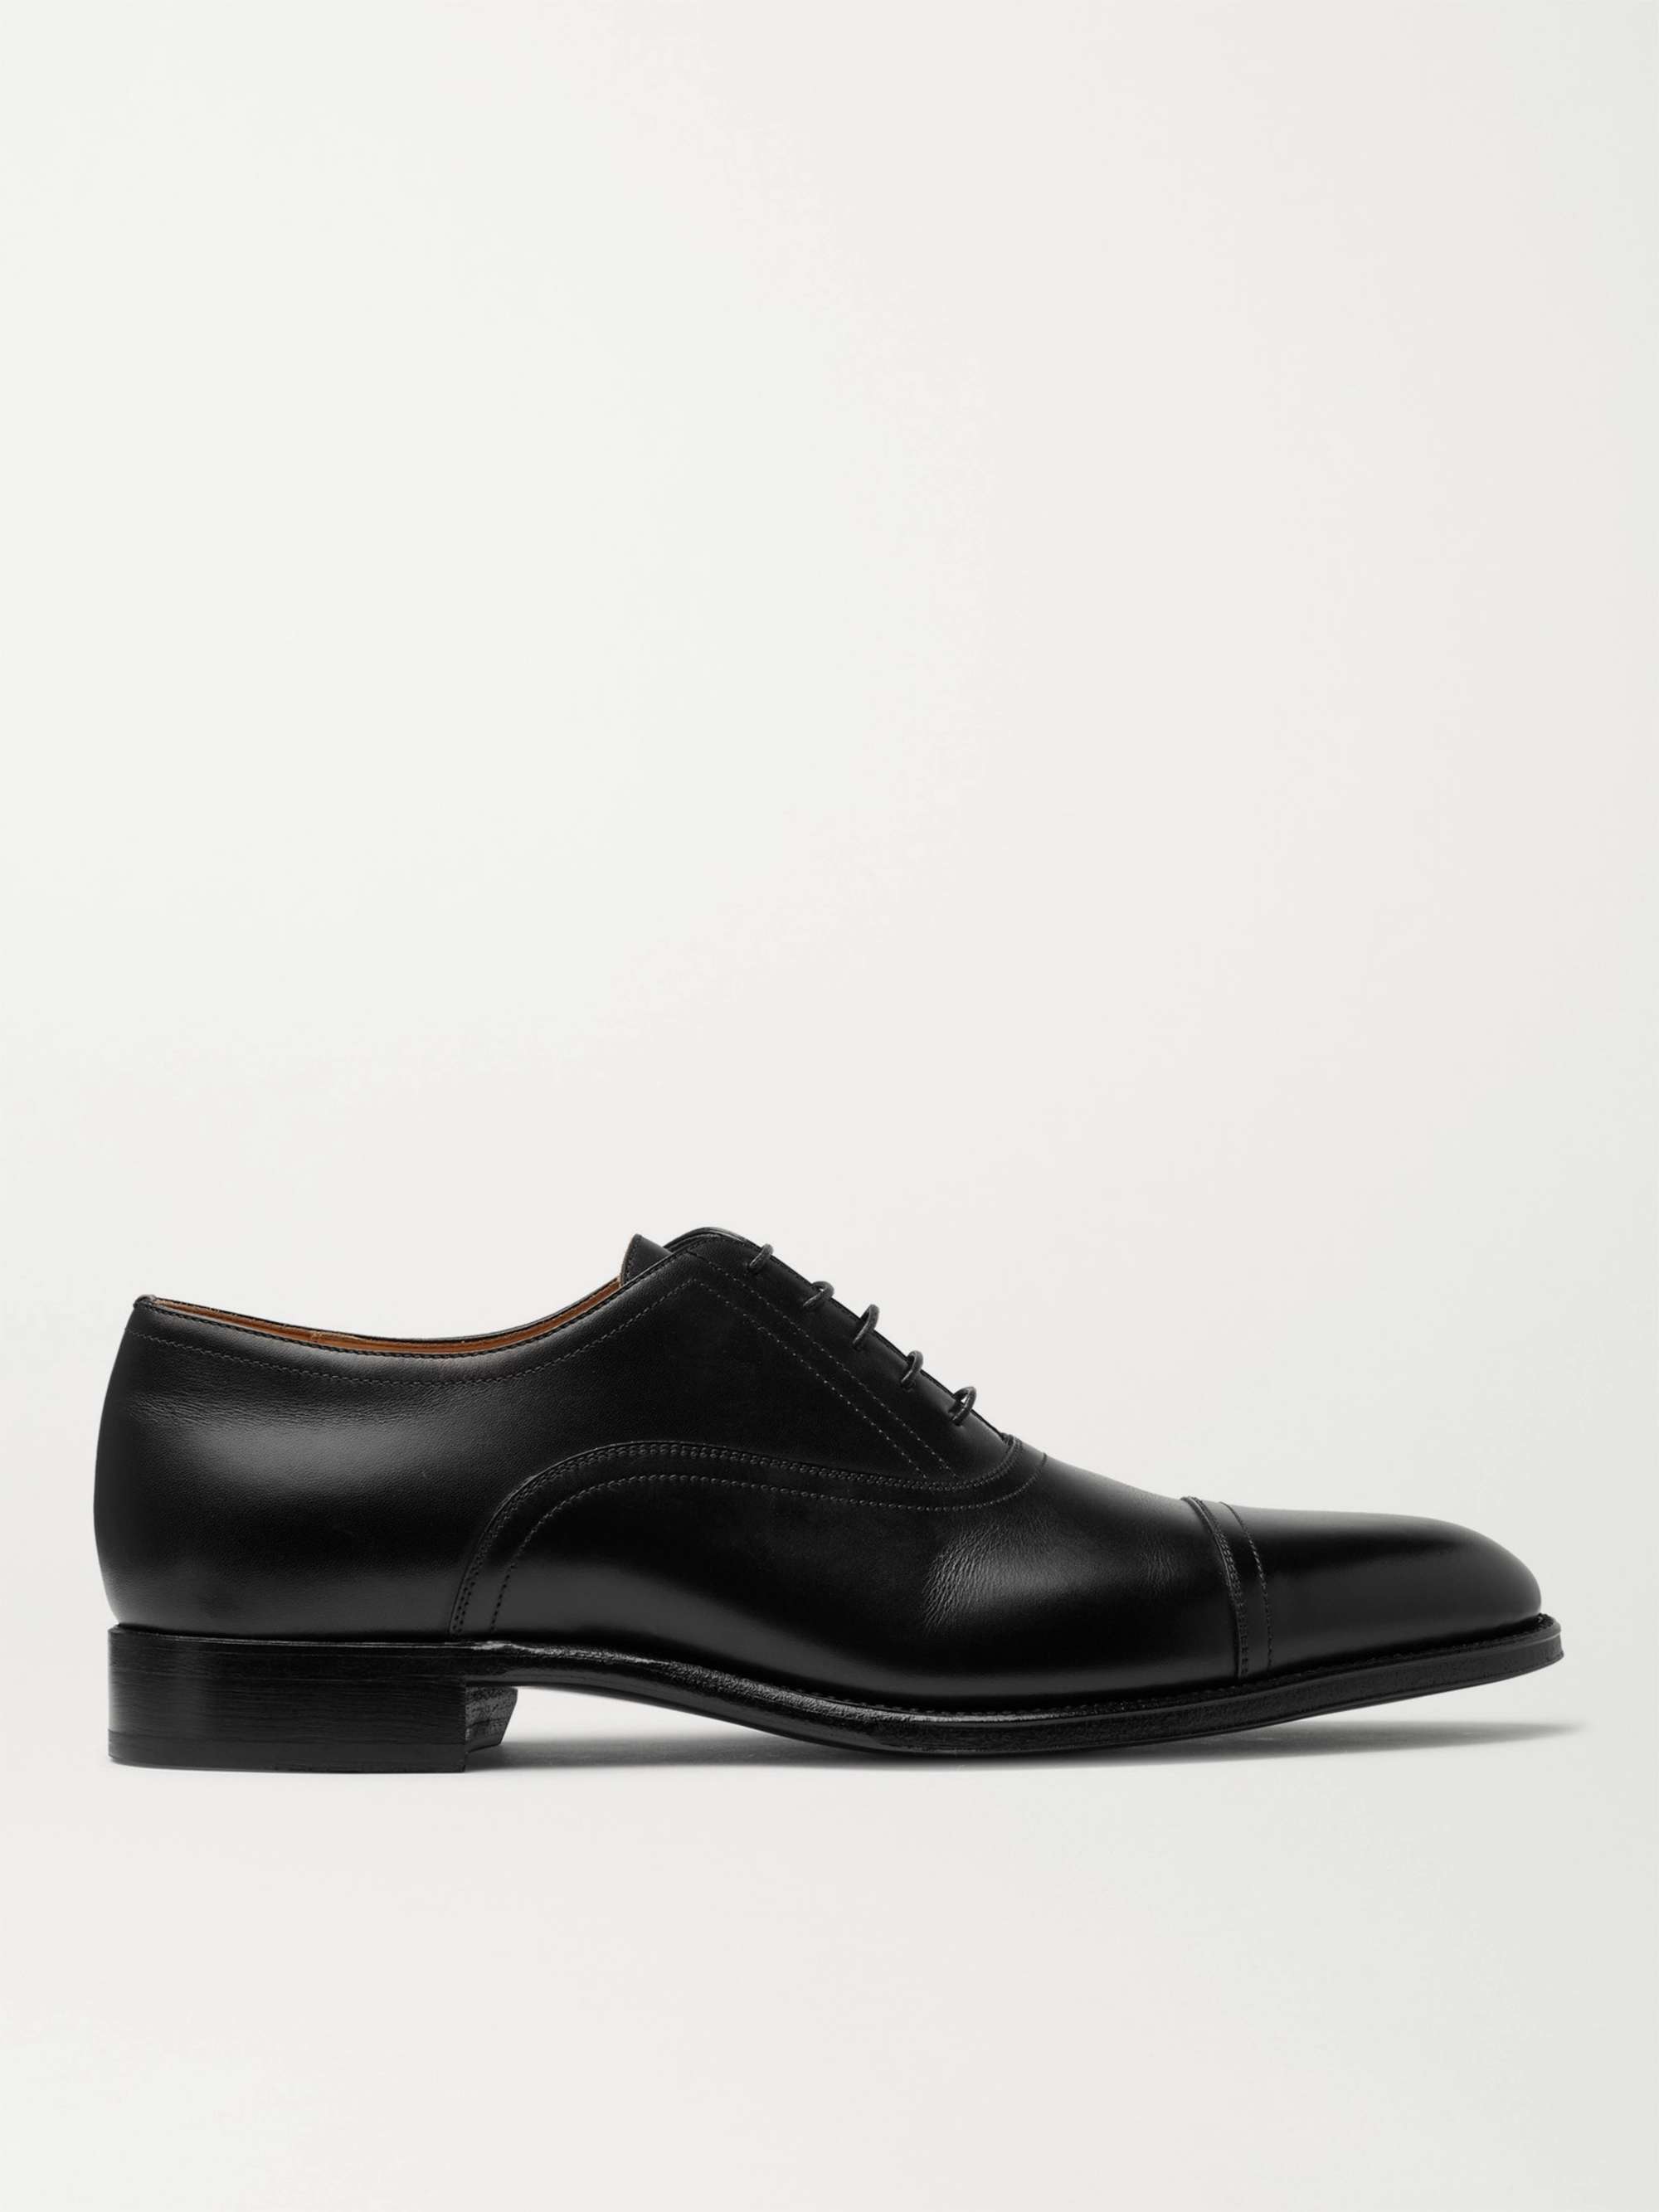 DUNHILL Kensington Leather Oxford Shoes for Men | MR PORTER